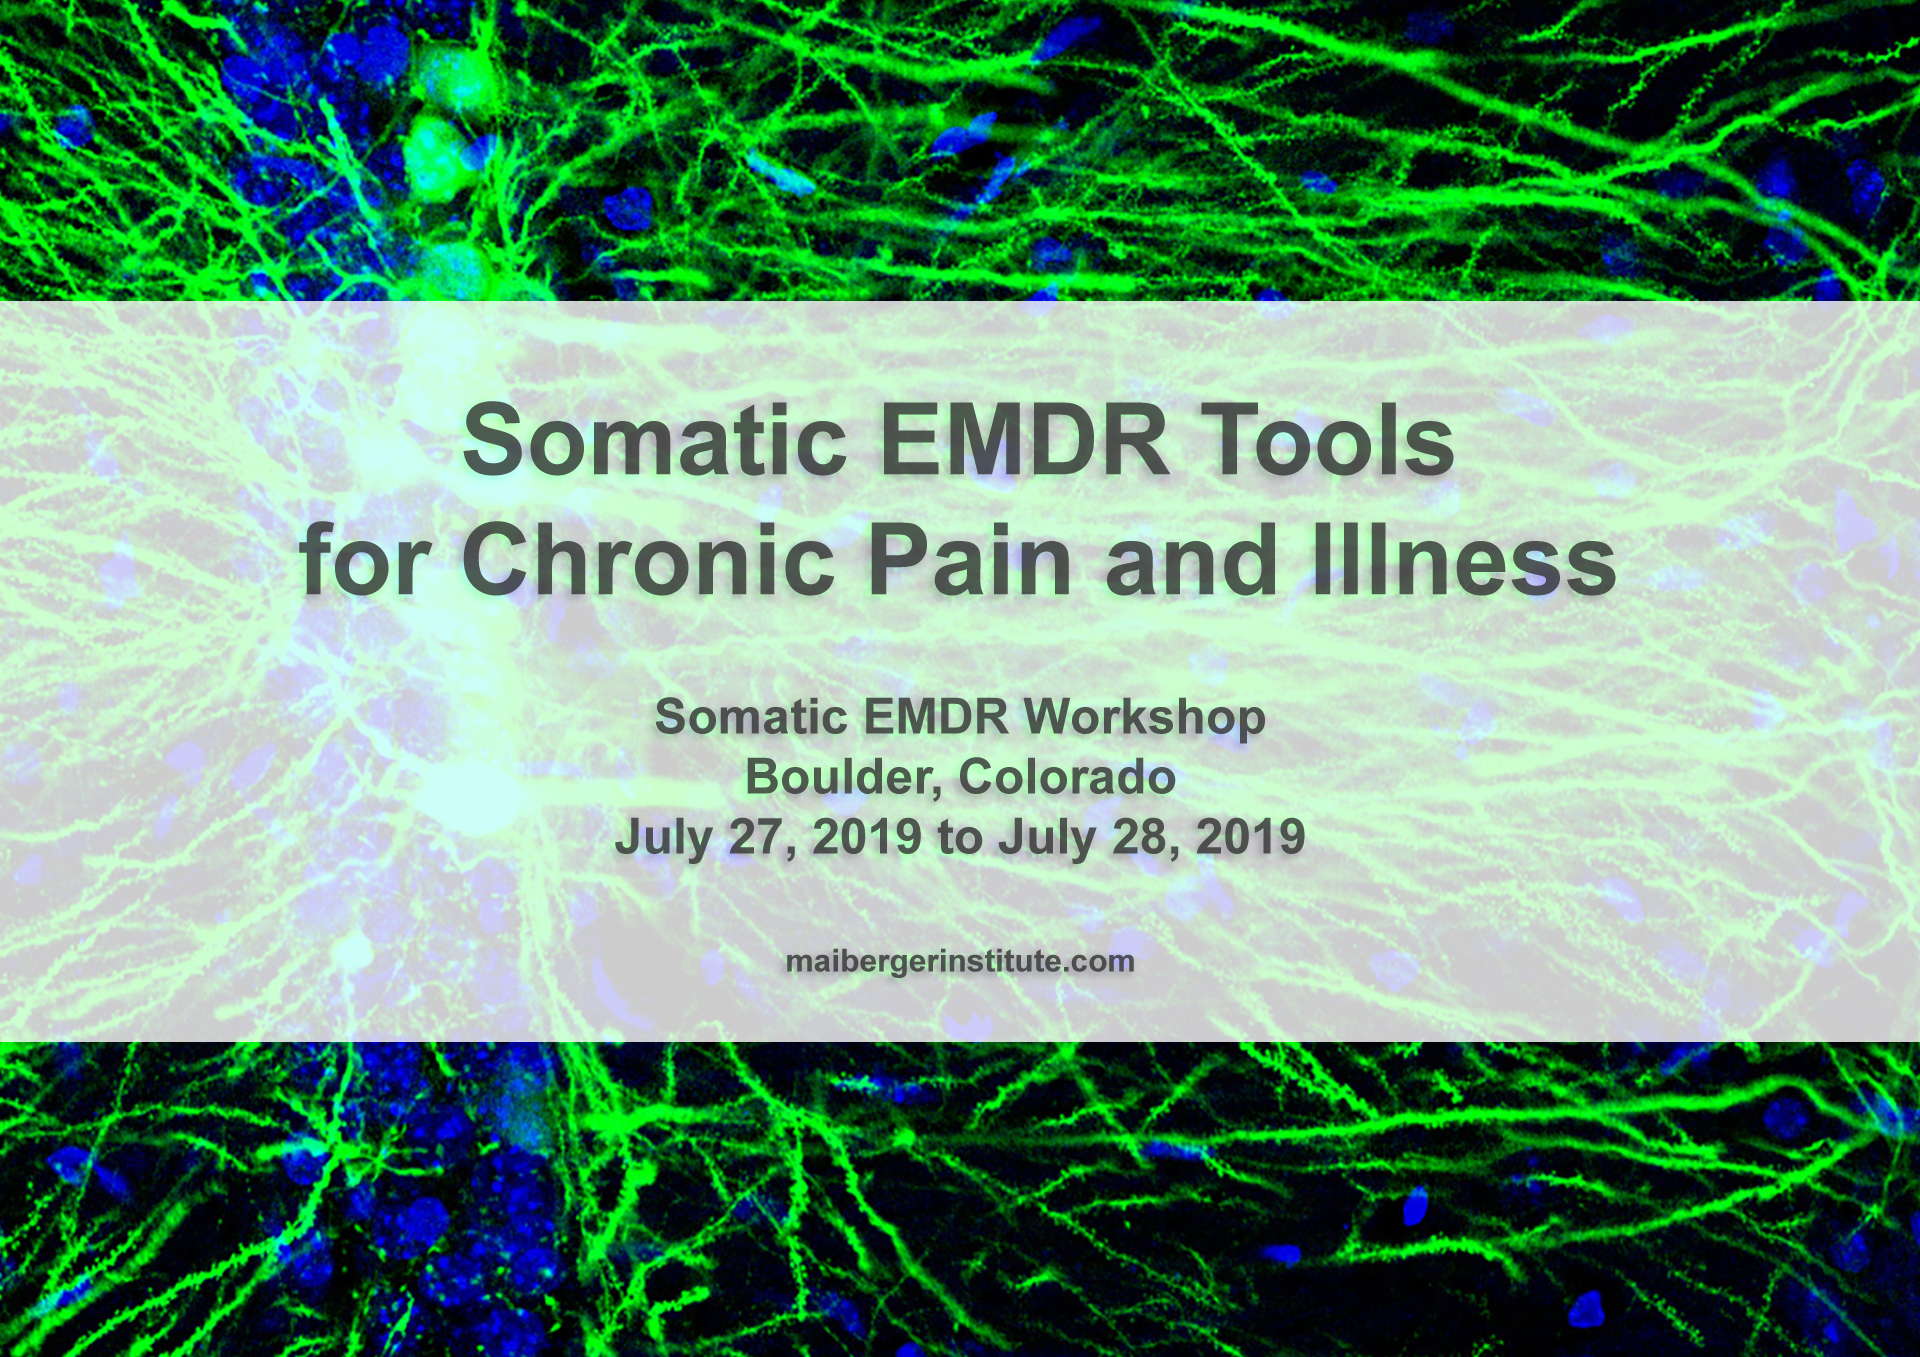 Somatic EMDR Tools for Chronic Pain and Illness - Somatic EMDR Workshop in Boulder, Colorado - July 27-28, 2019